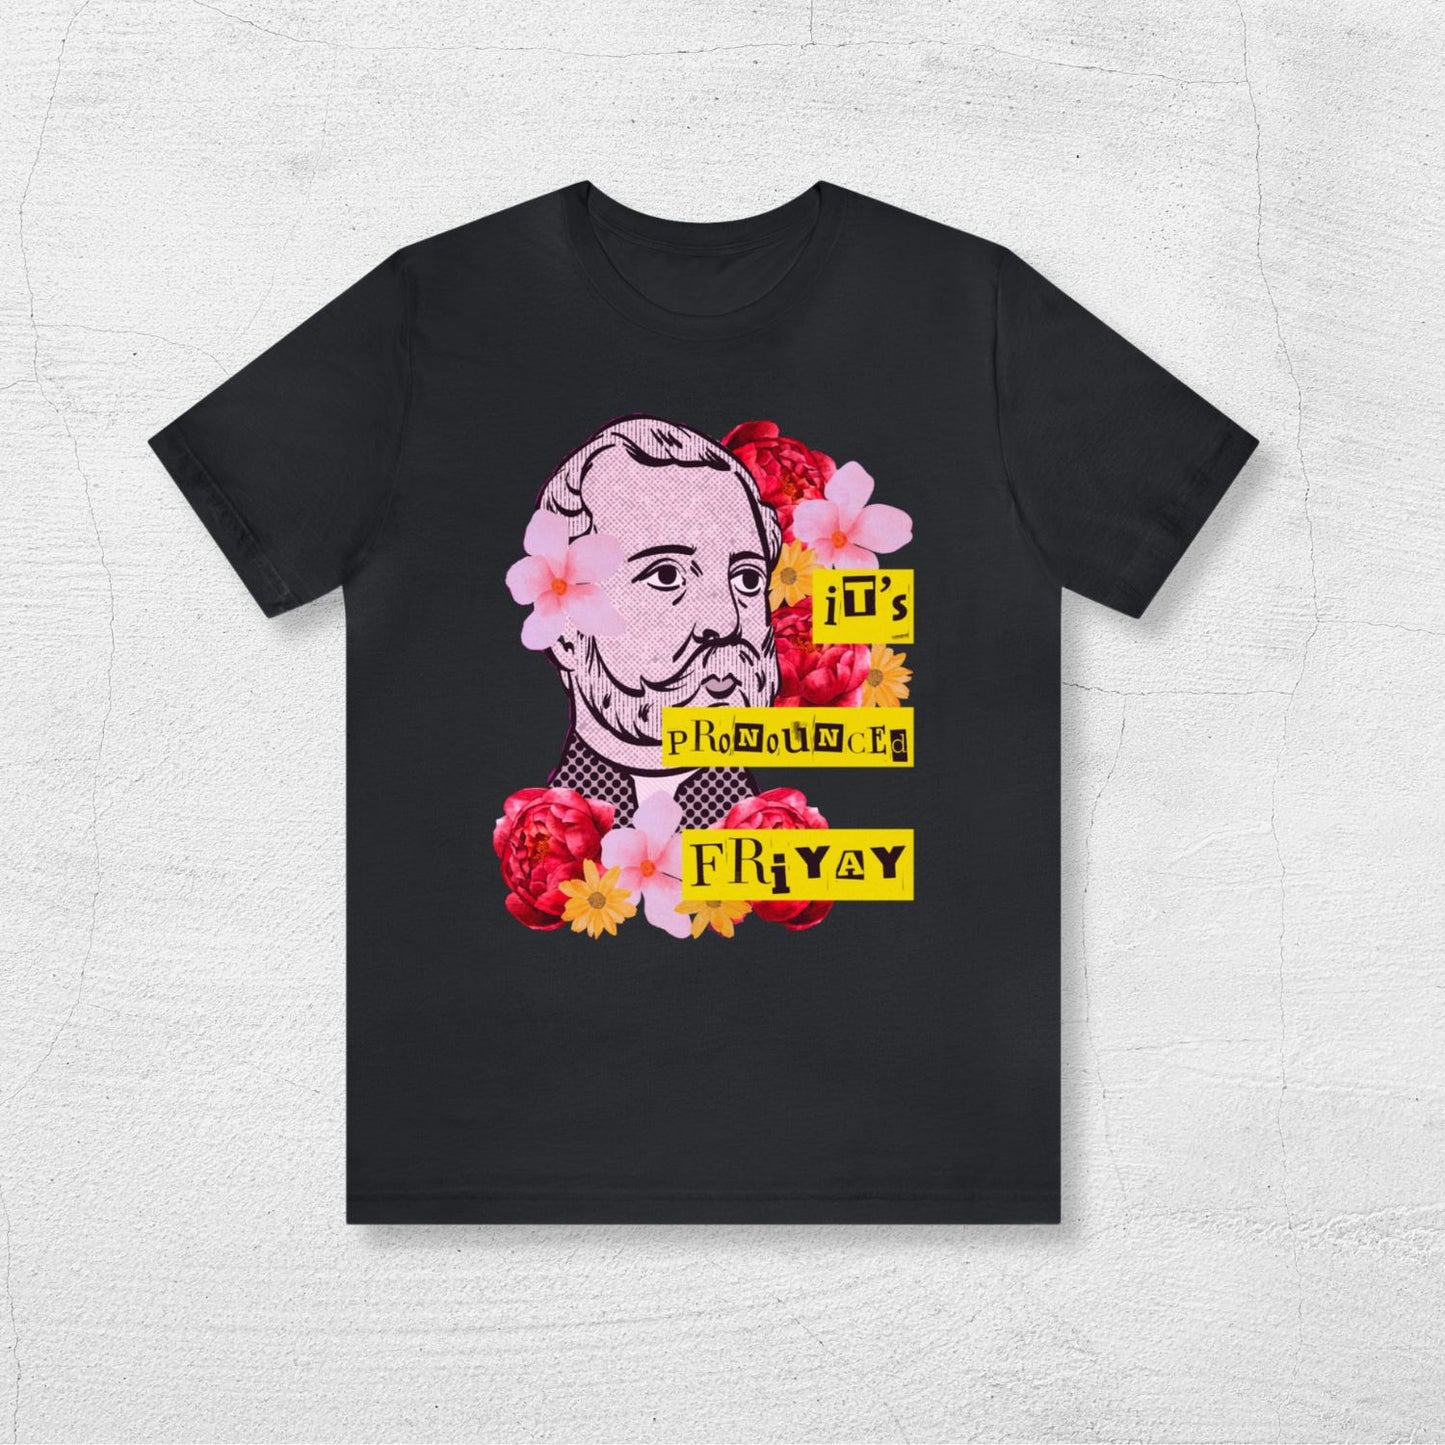 It's Pronounced Friyay, Shirts for Teachers